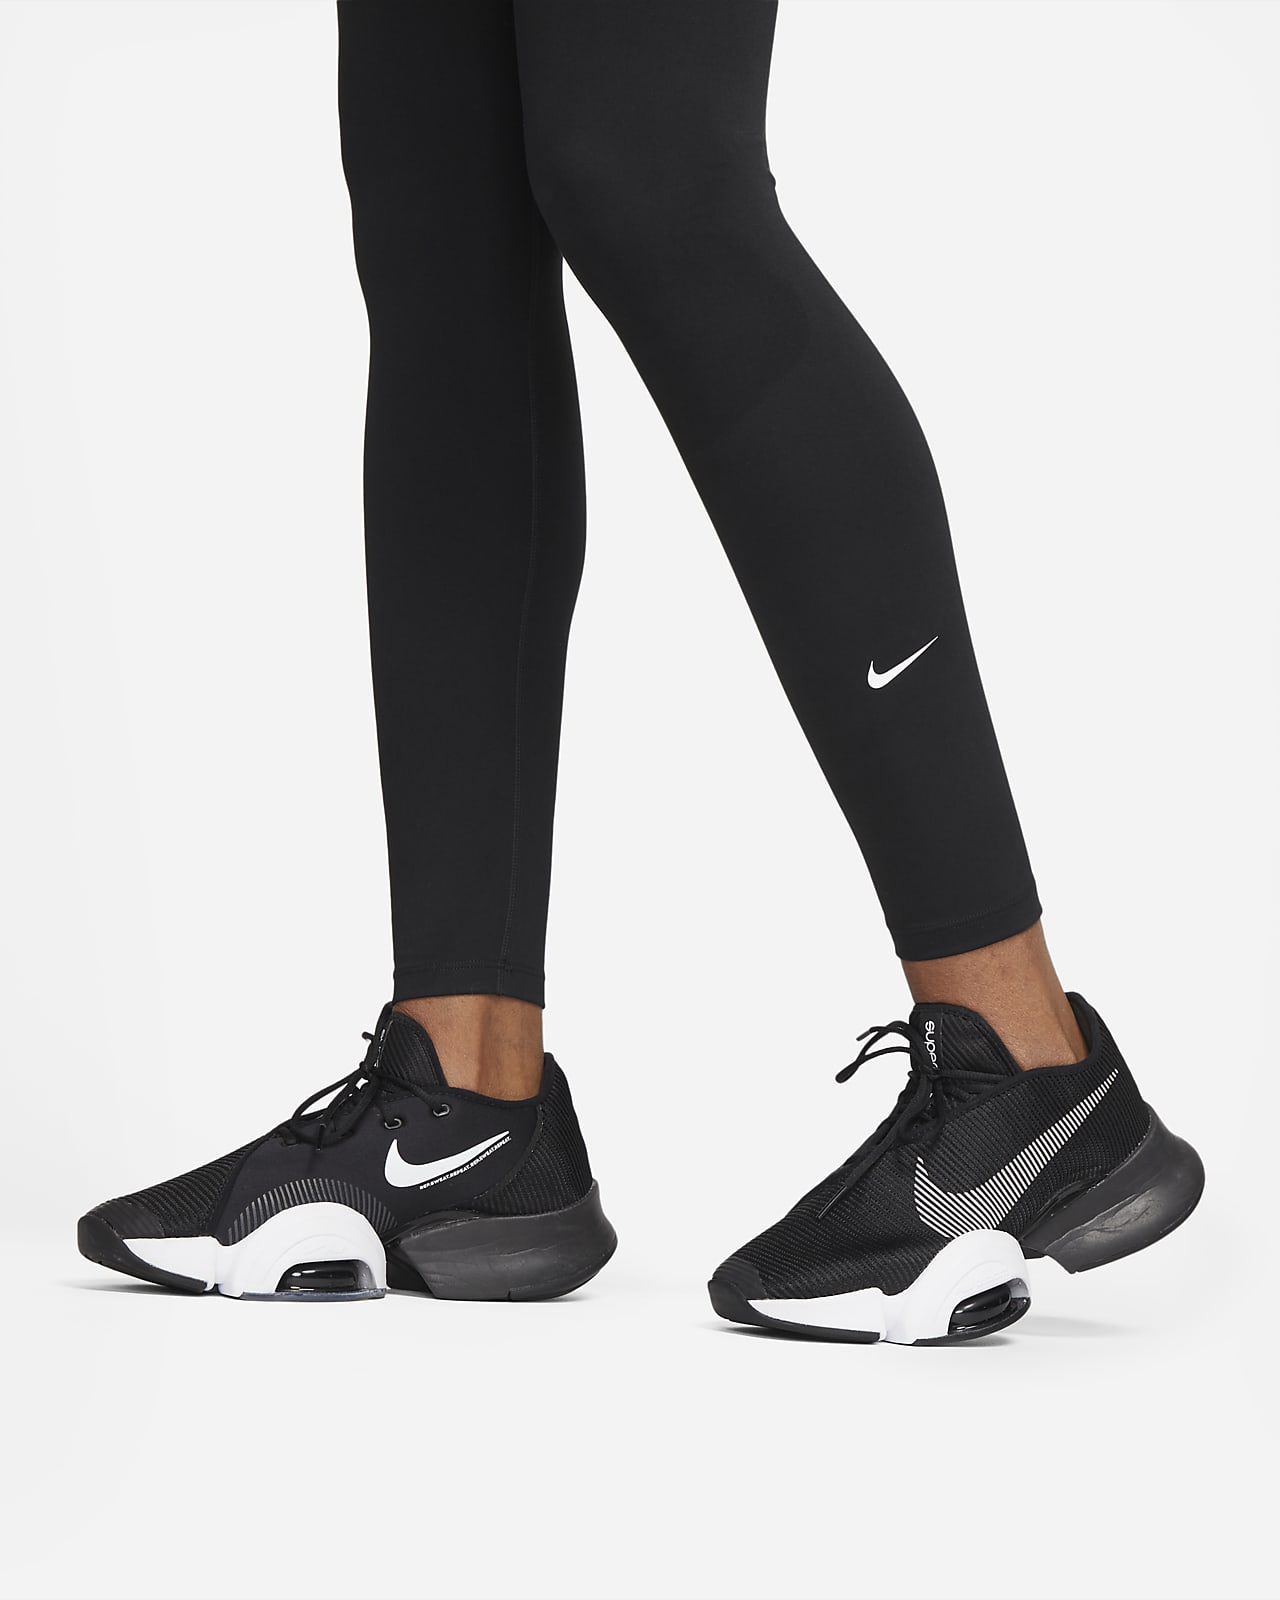 Nike One Women's Leggings. AU